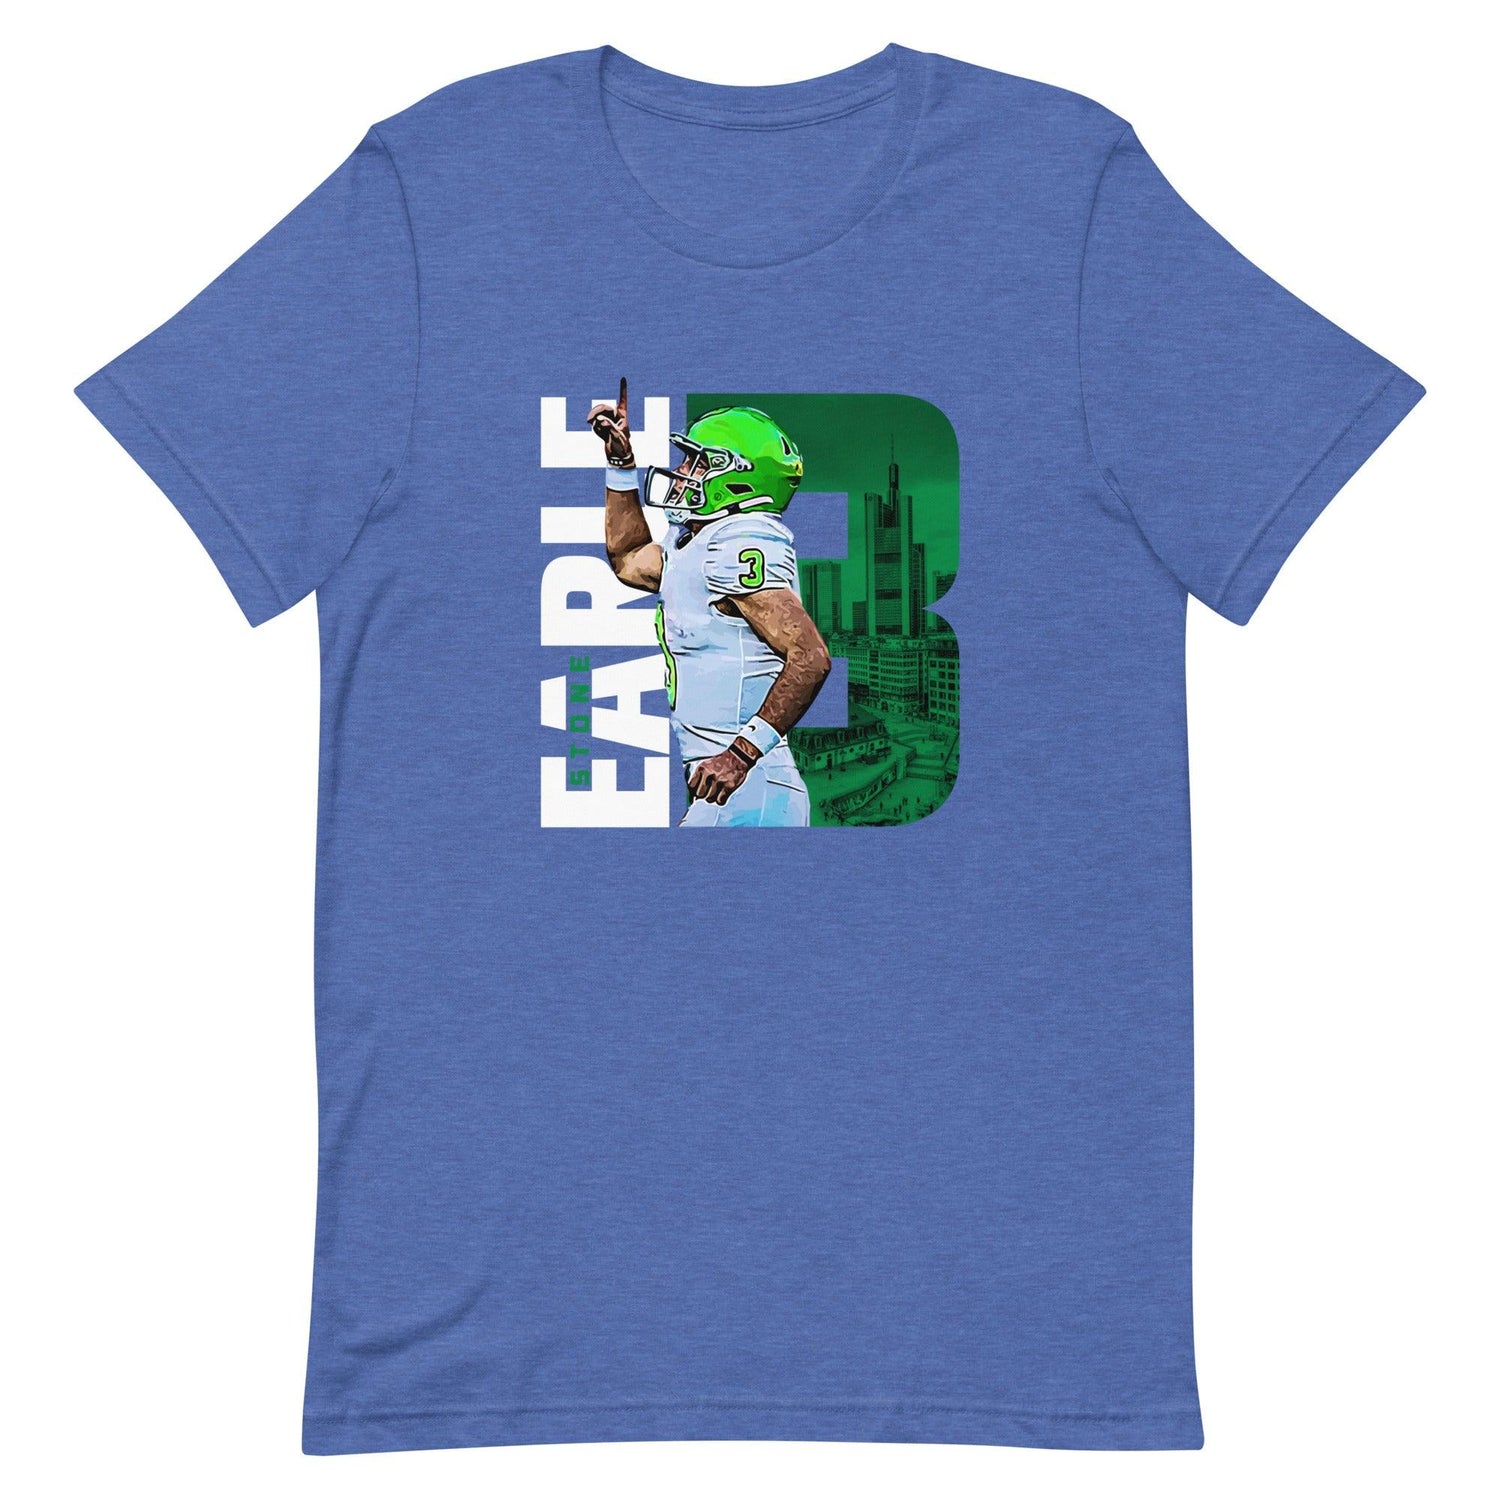 Stone Earle "Gameday" t-shirt - Fan Arch